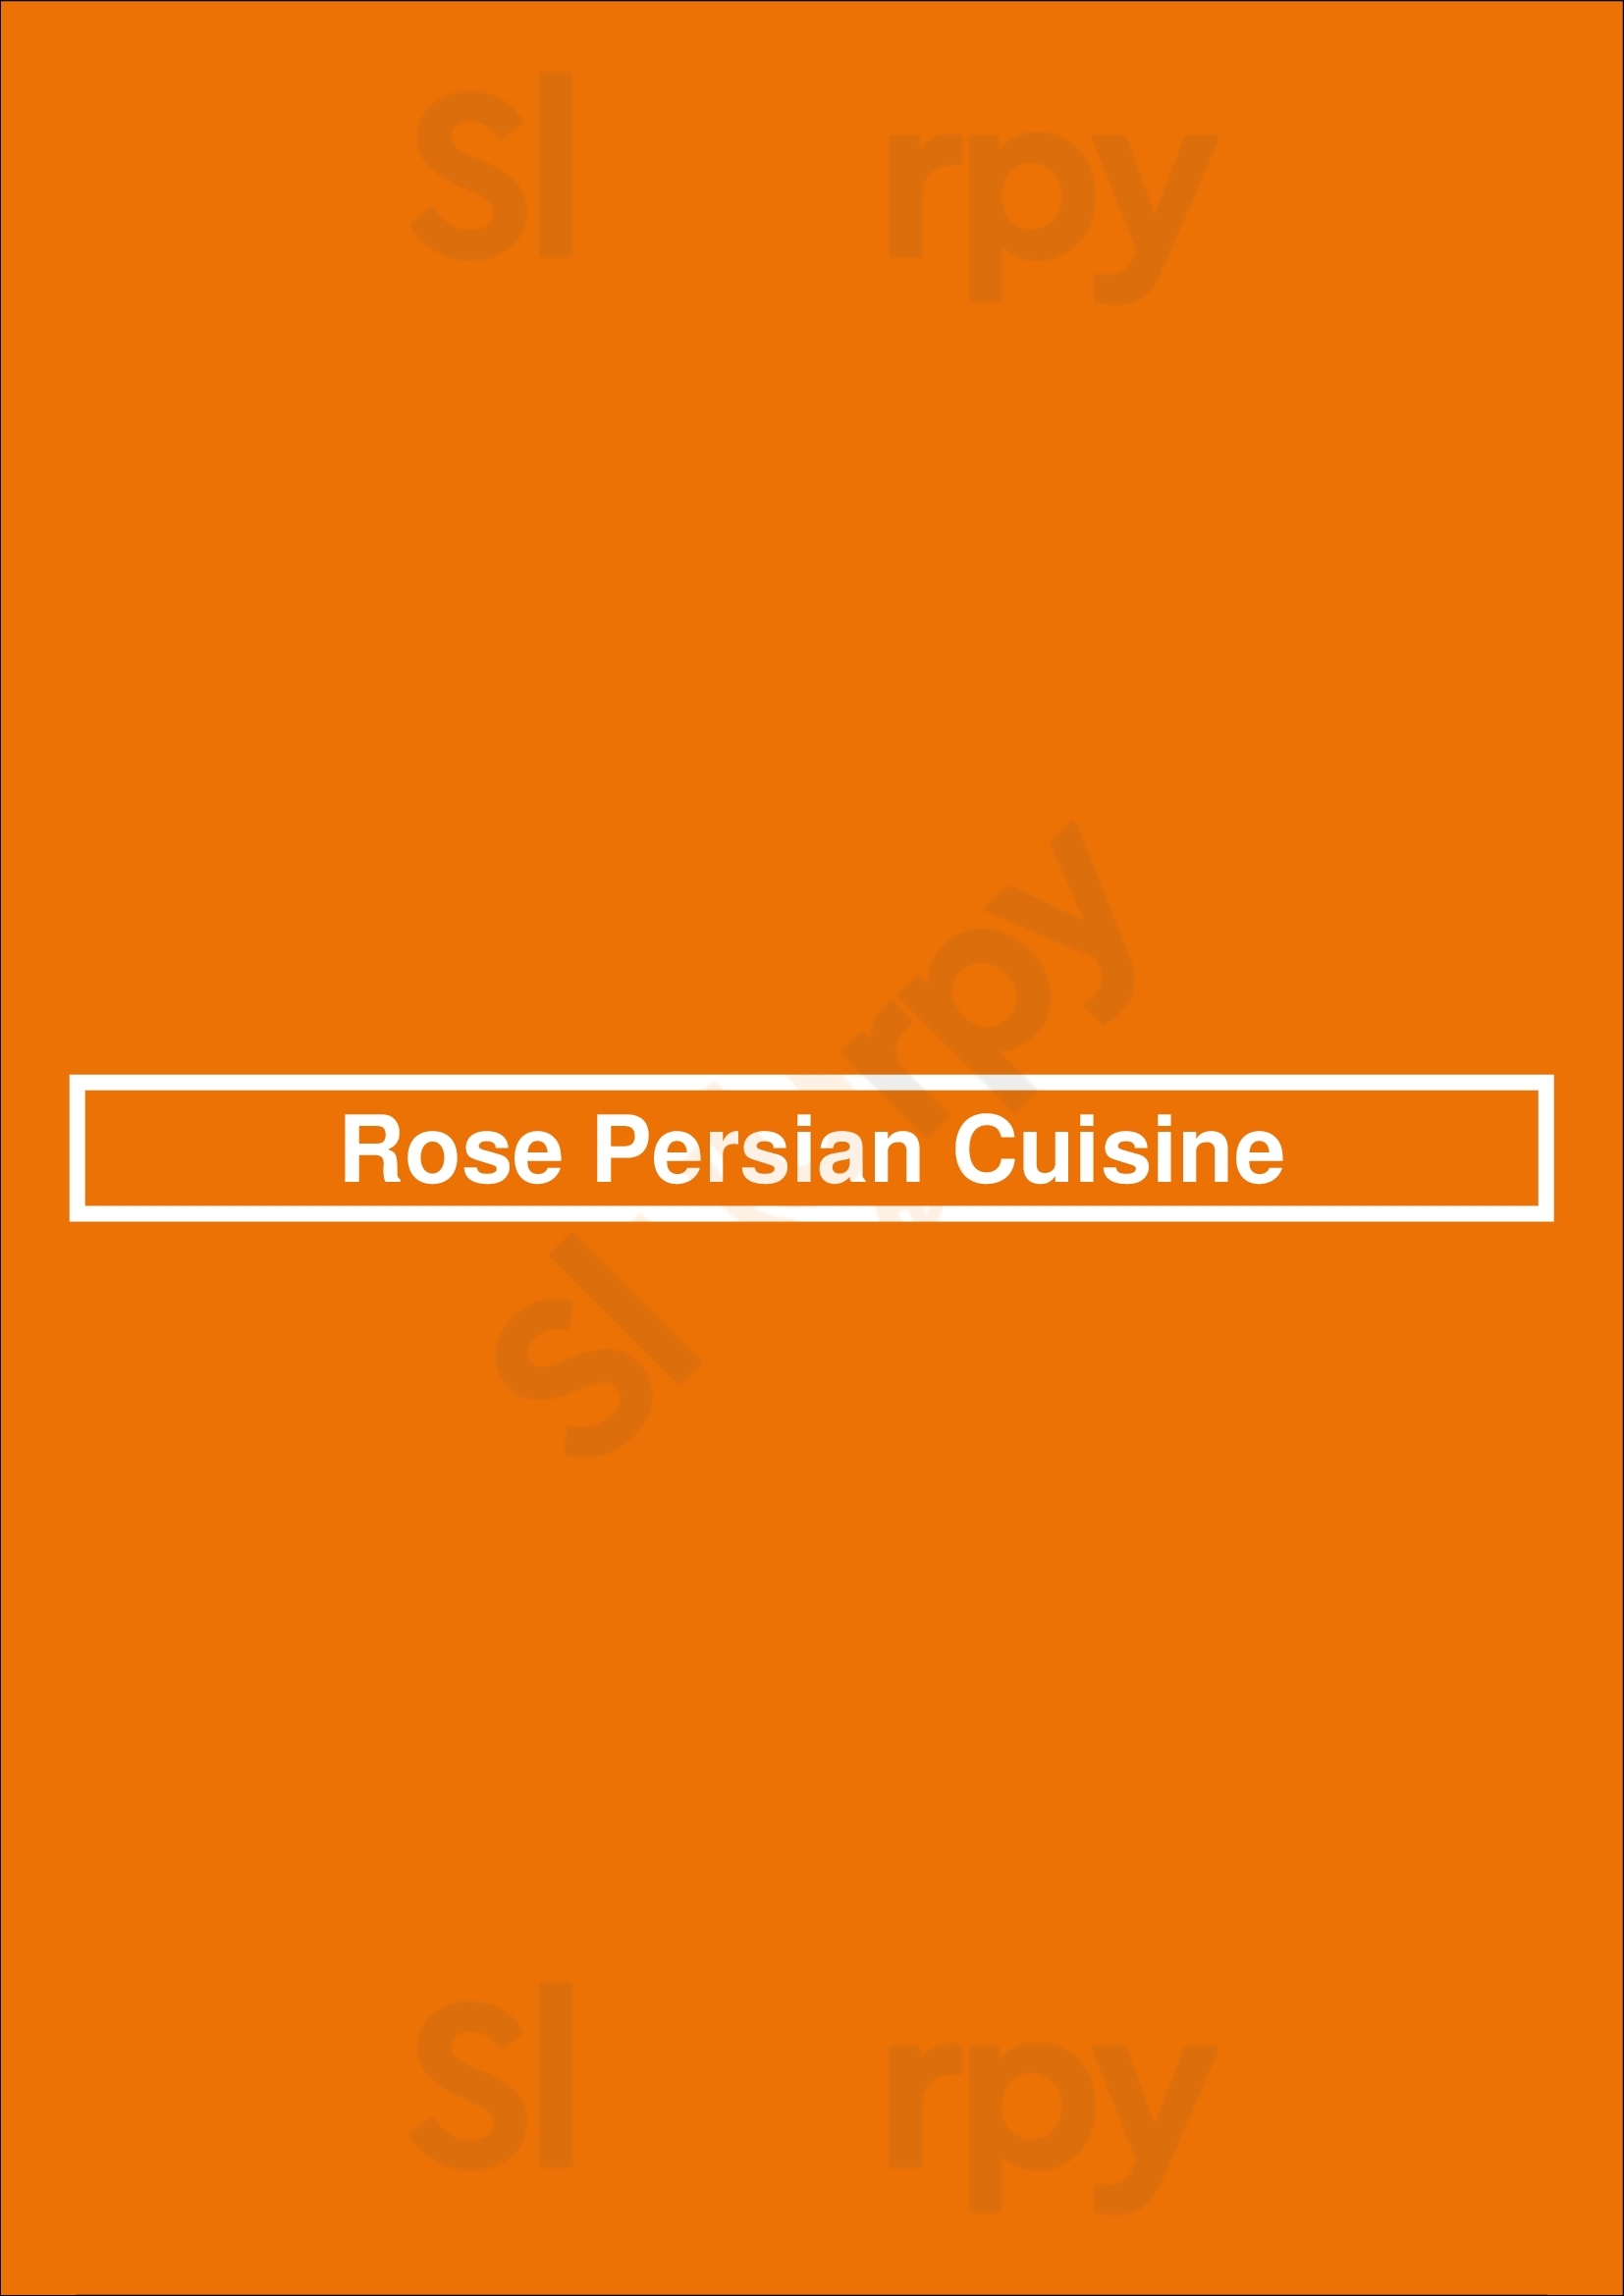 Rose Persian Cuisine West Vancouver Menu - 1